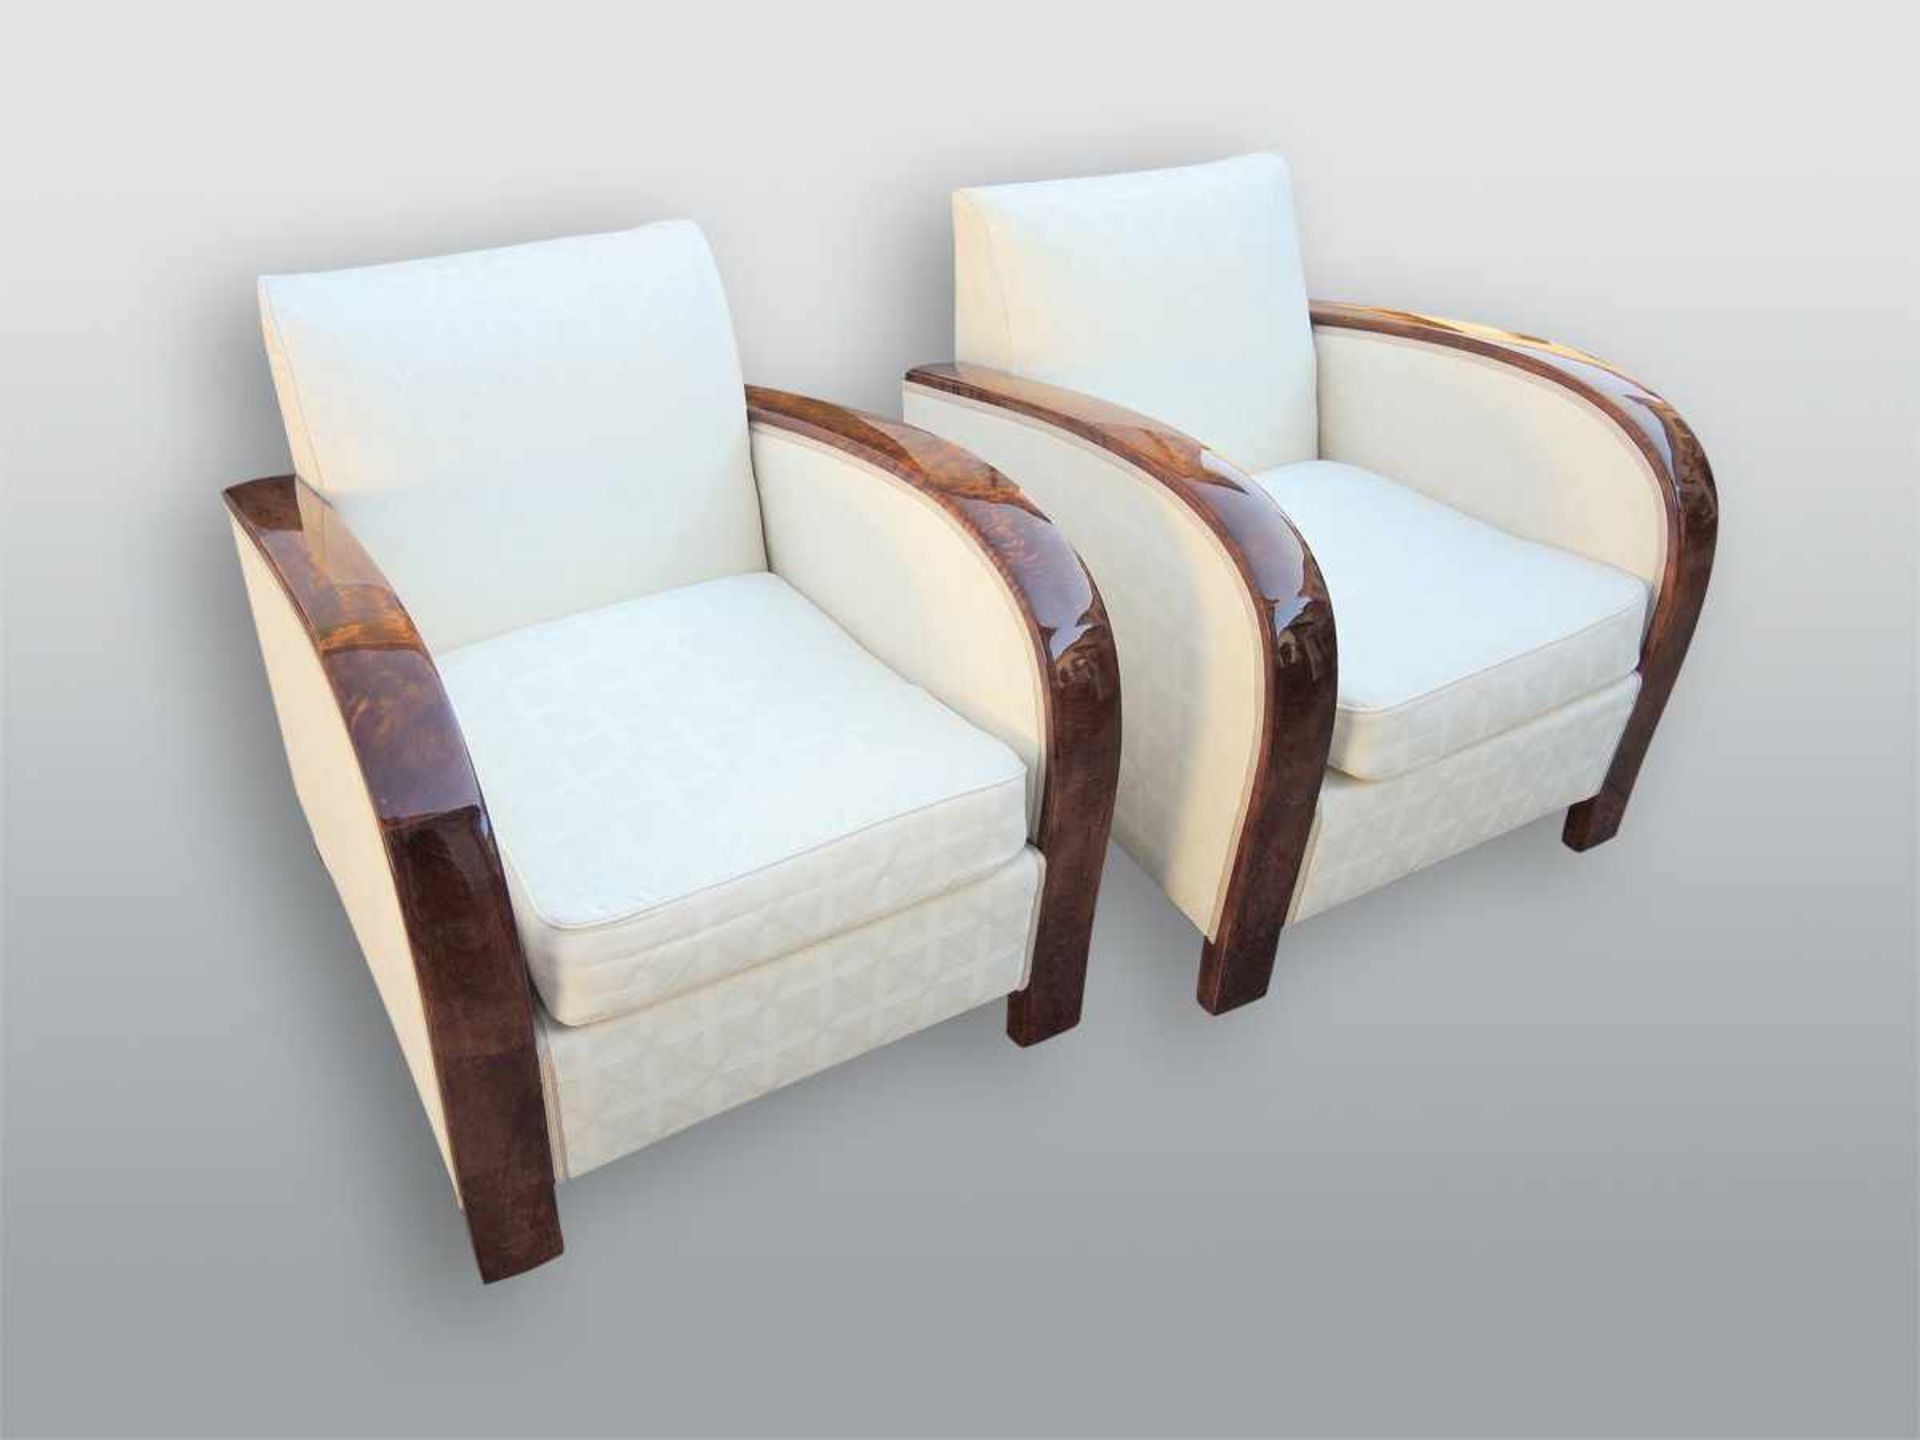 Paar Seltene Art-Deco-Sessel Makassar-Ebenholz, Hochglanz poliert, mit weißen Leinen überzogen.